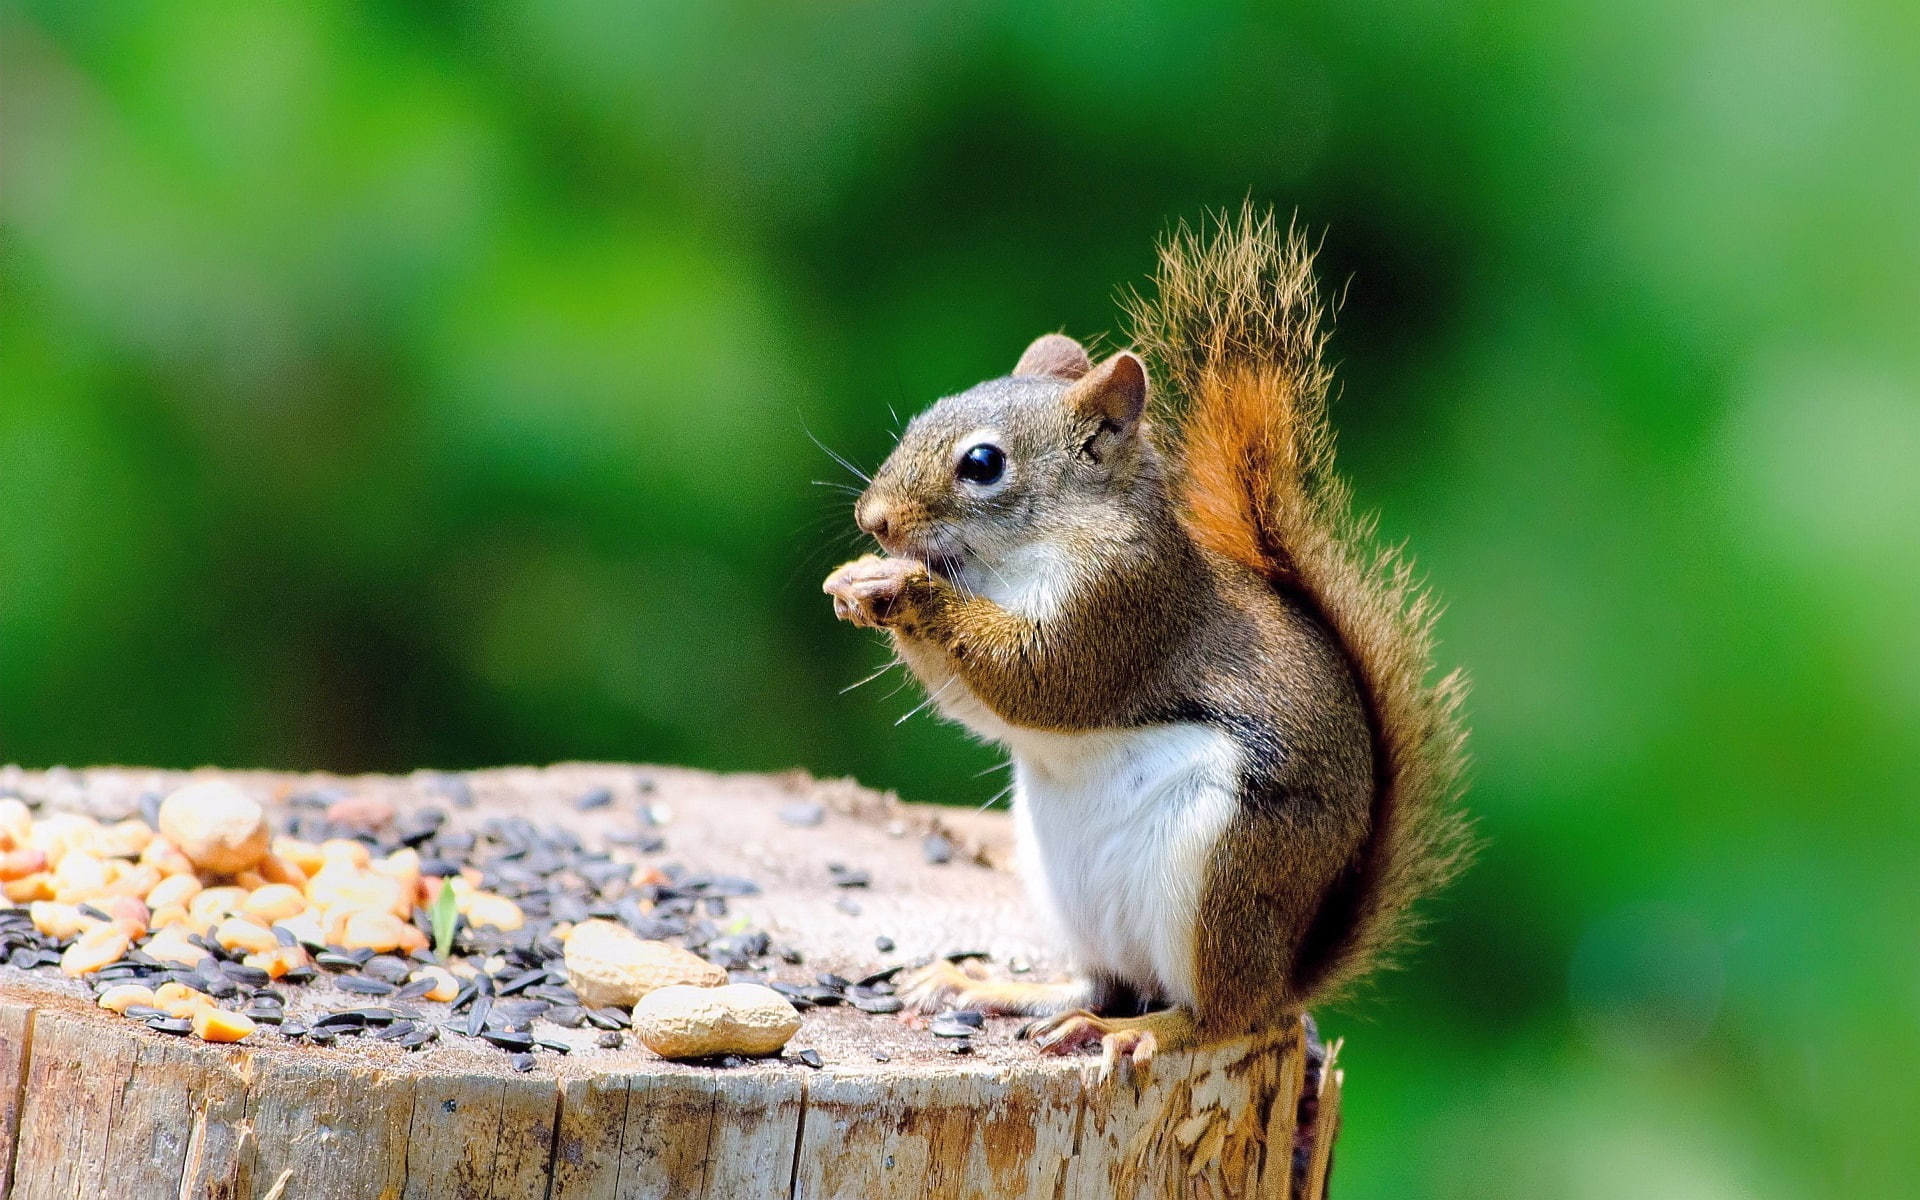 Cute squirrel, stump, eating something